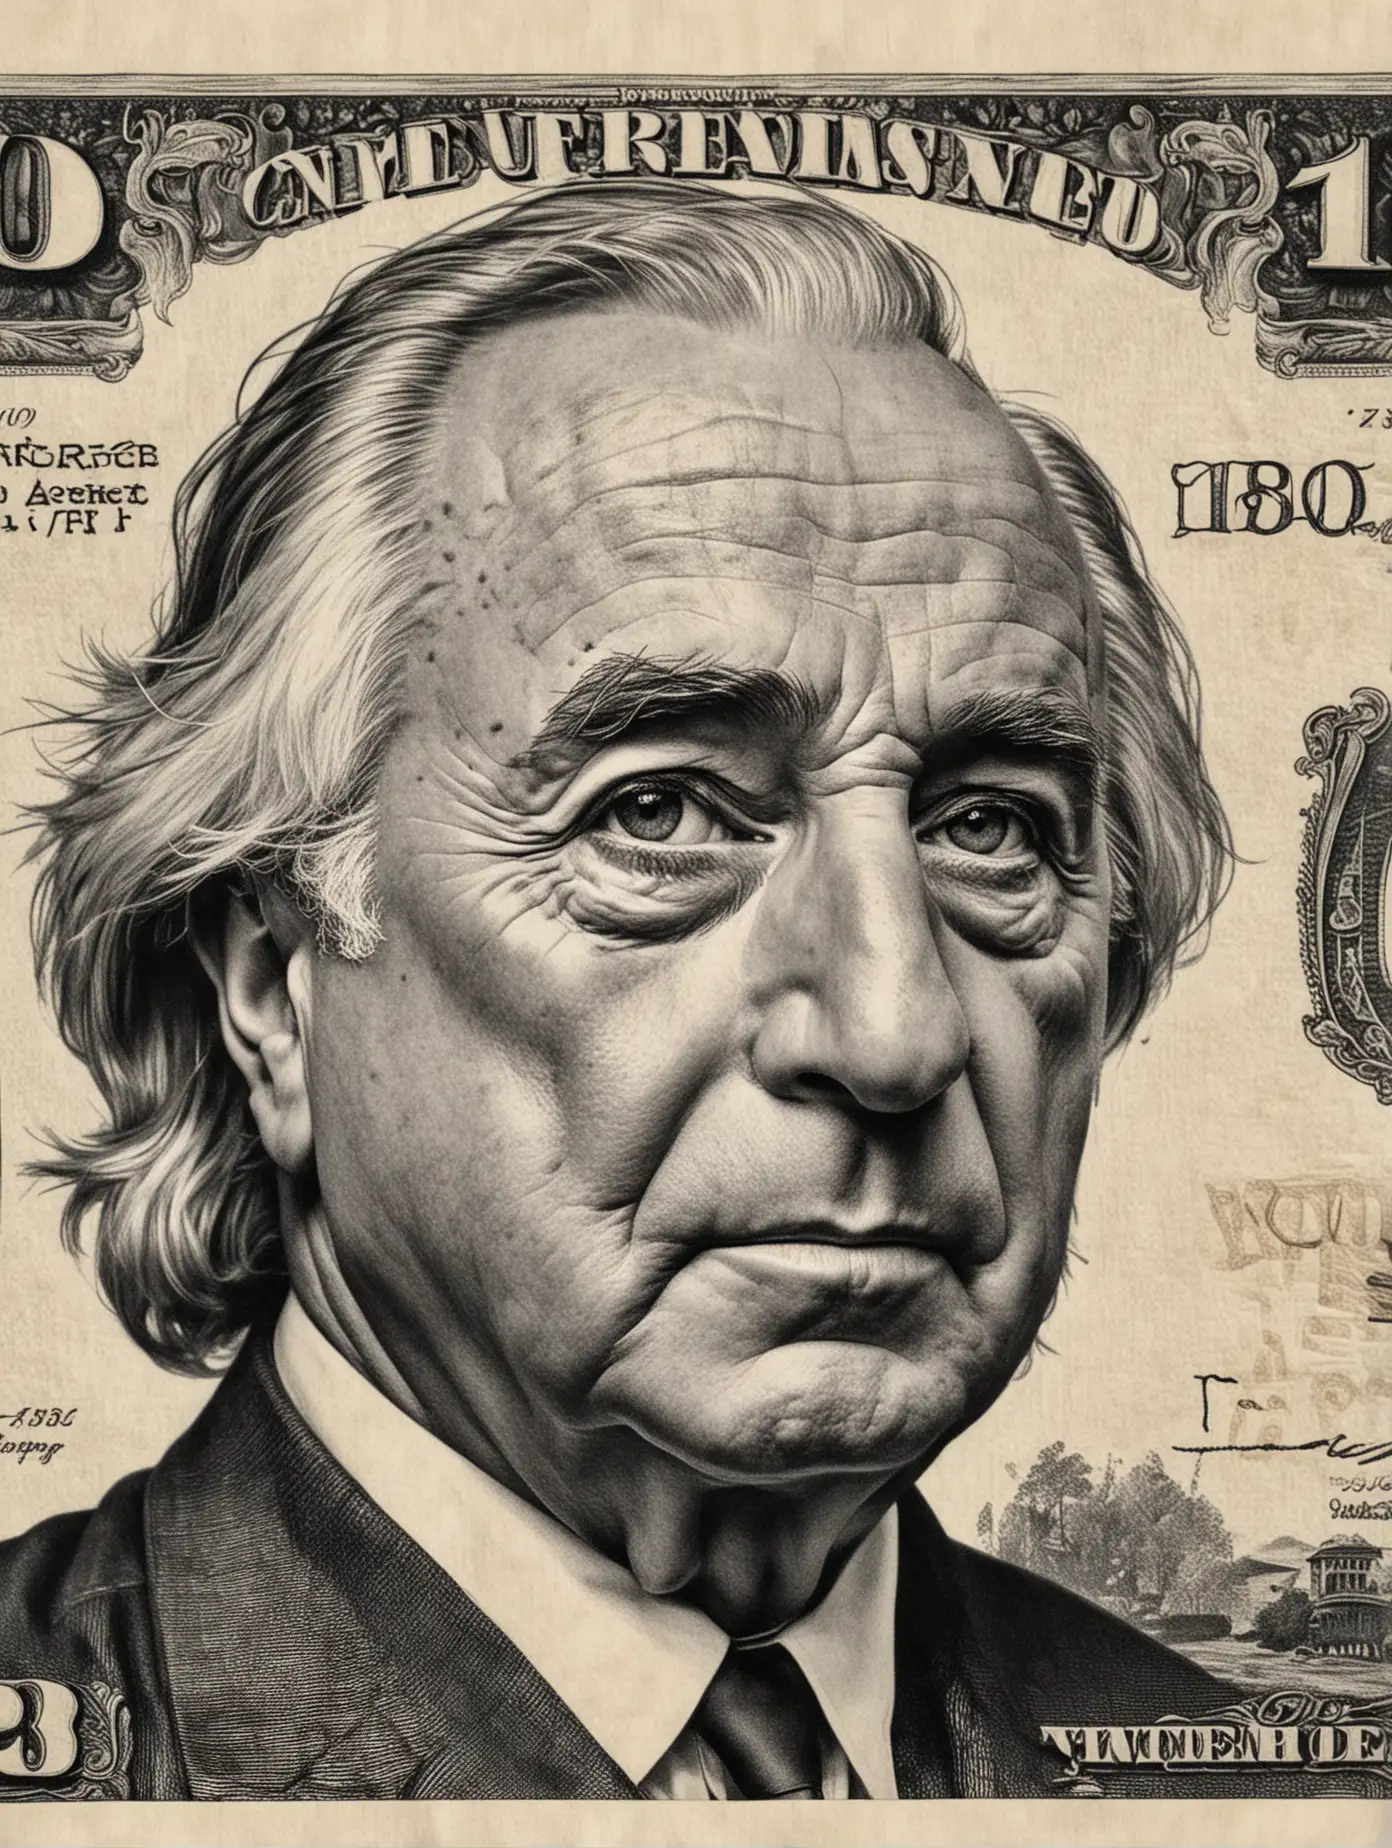 Bernie Madoff Portrait Illustration on Banknote in Monochrome Style